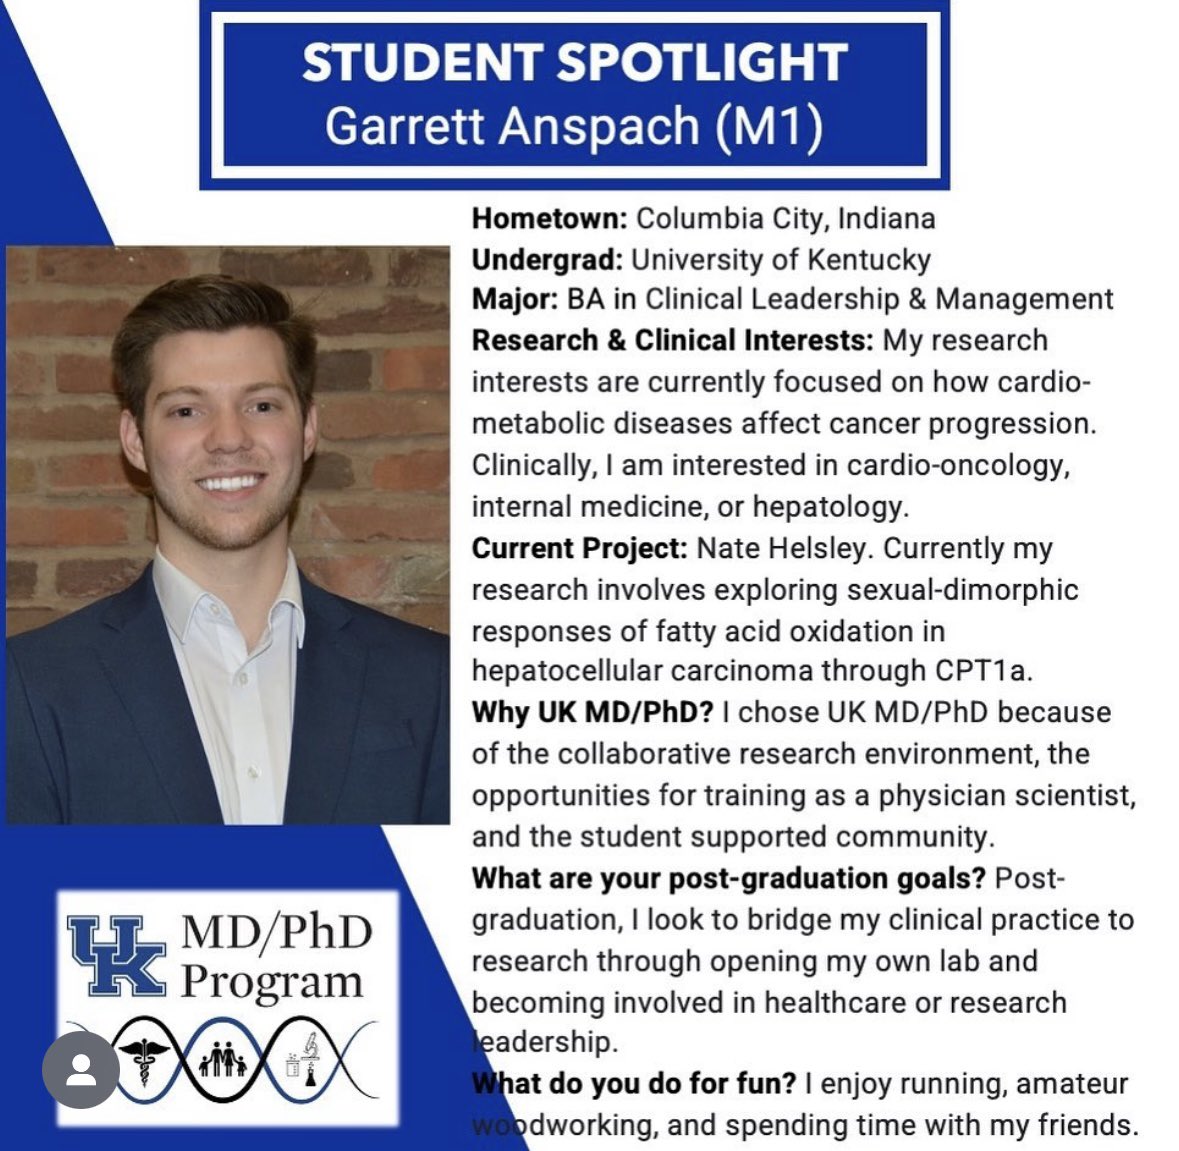 University of Kentucky MD/PhD Program - Meet Chad Coomer, a current G4!